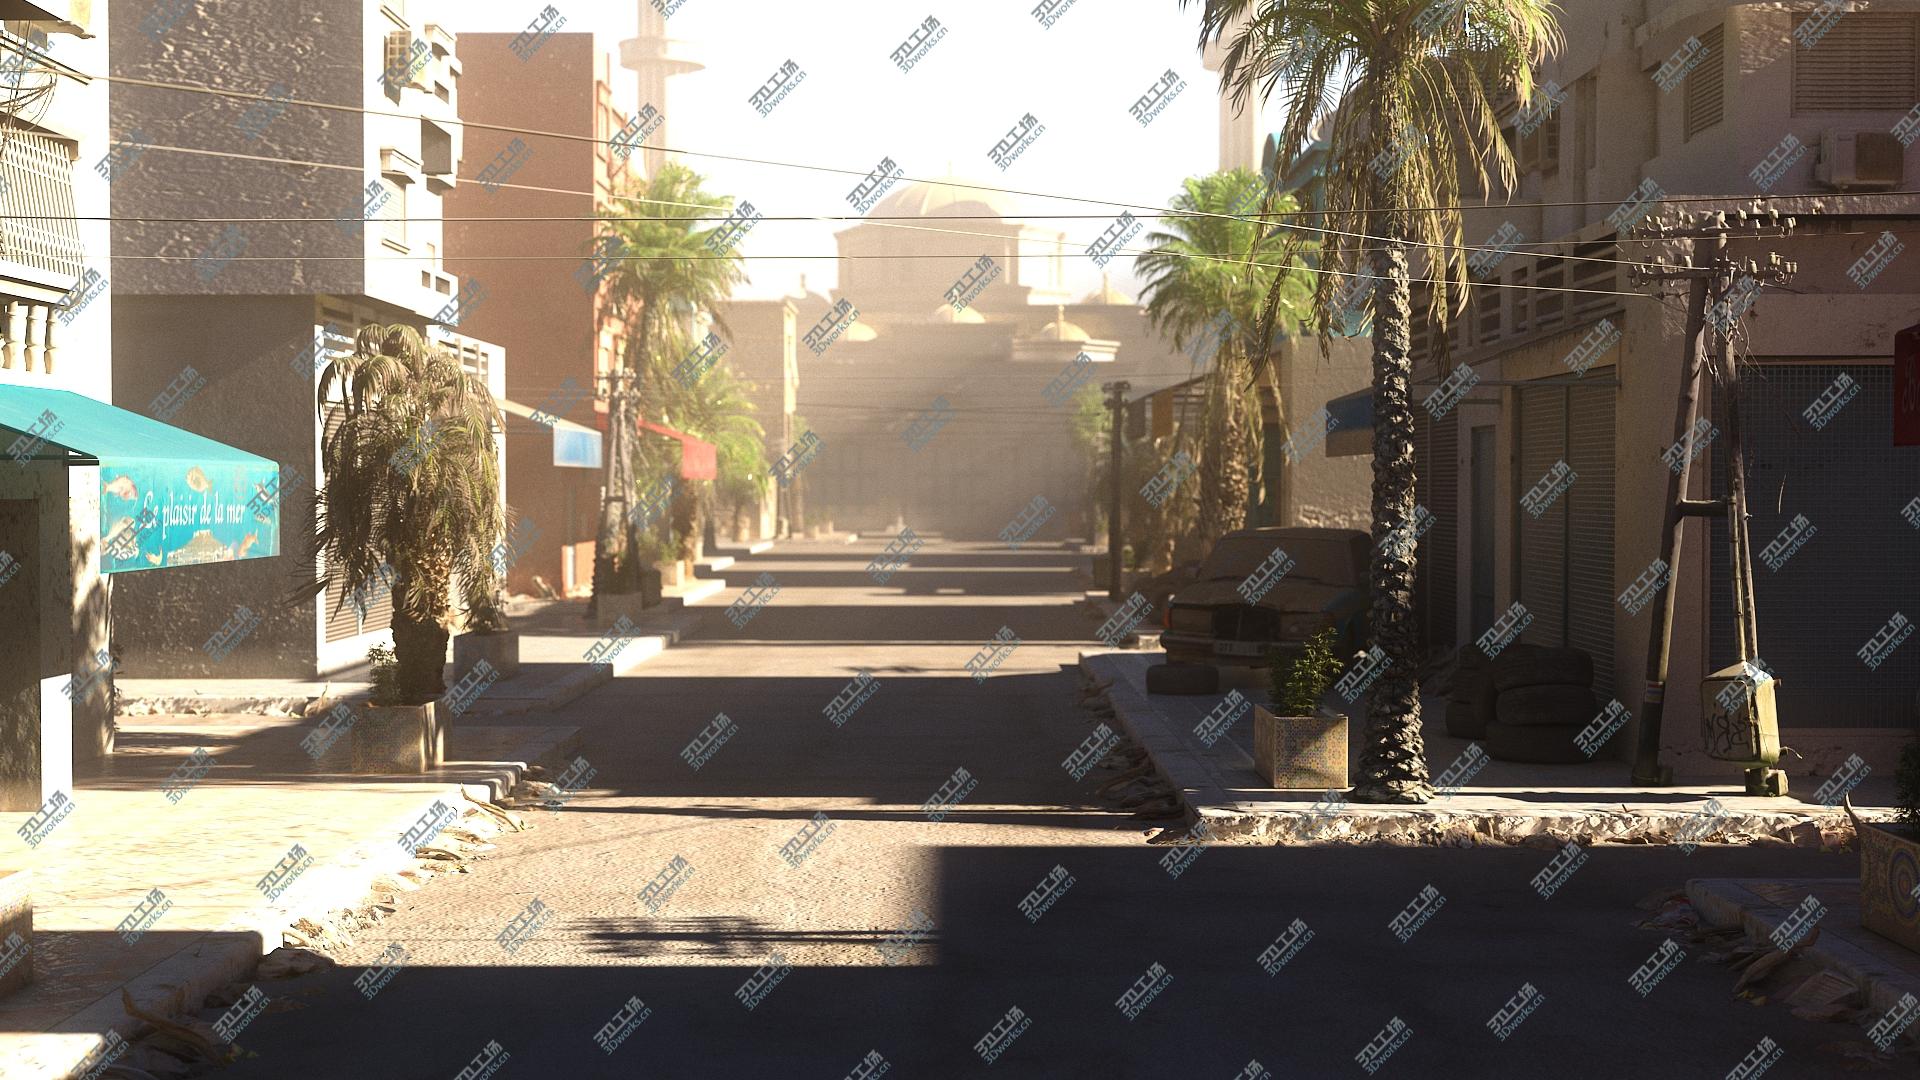 images/goods_img/202104092/Arab City Animated HD 3D model/3.jpg